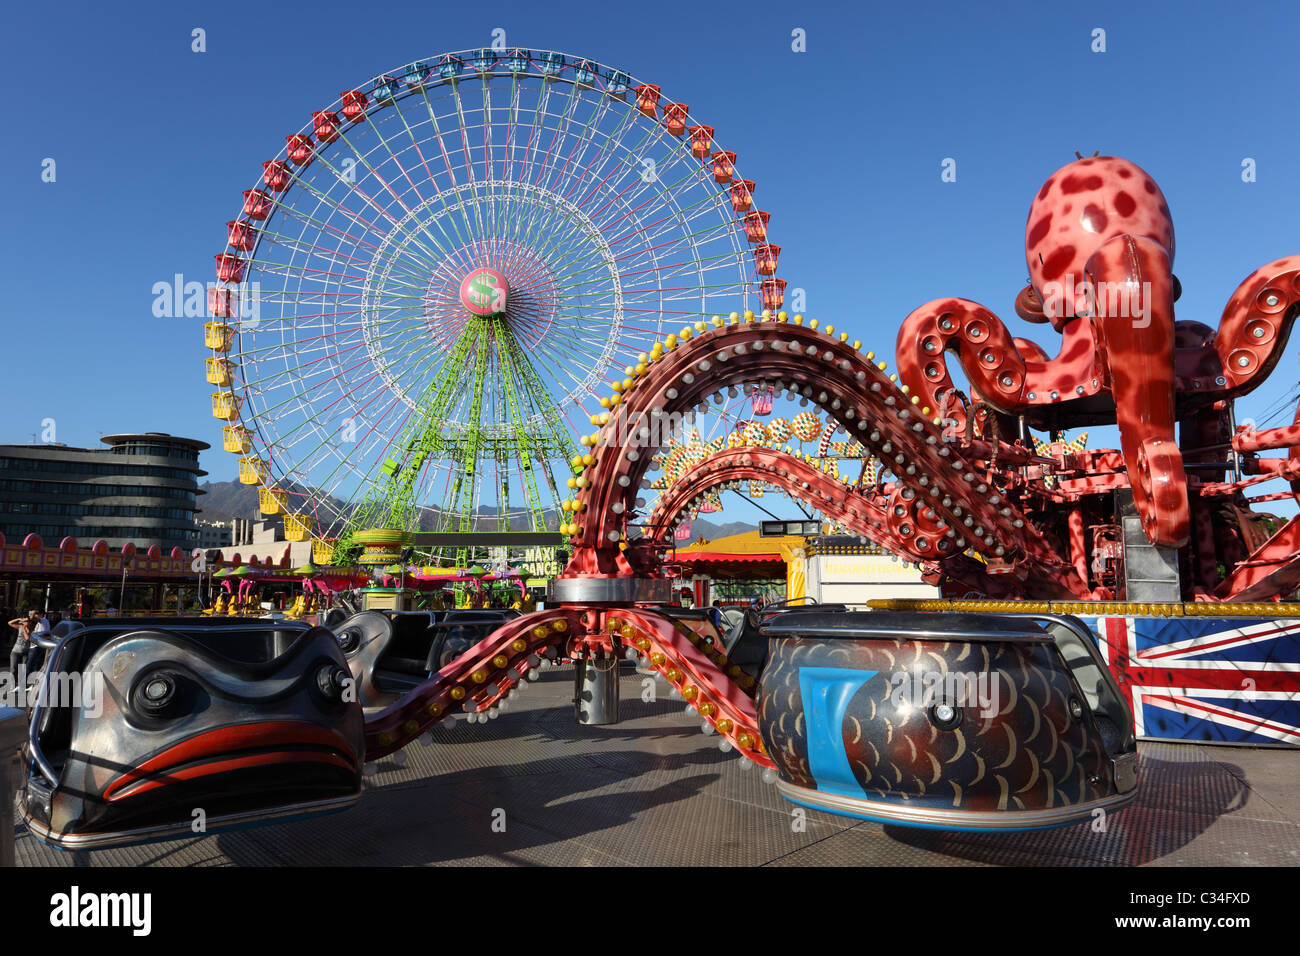 Amusement park ride in Santa Cruz de Tenerife, Spain. Stock Photo